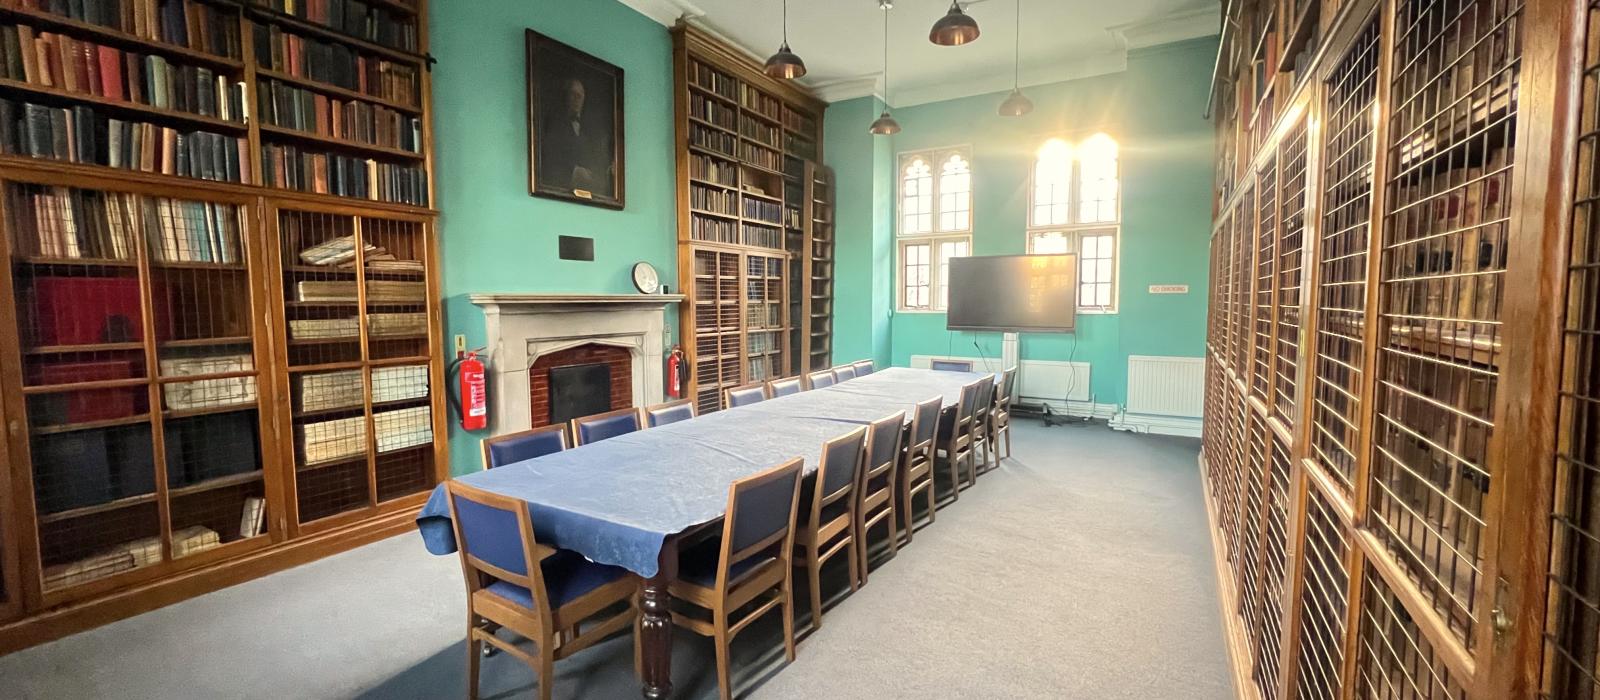 Russell Room, Balliol College